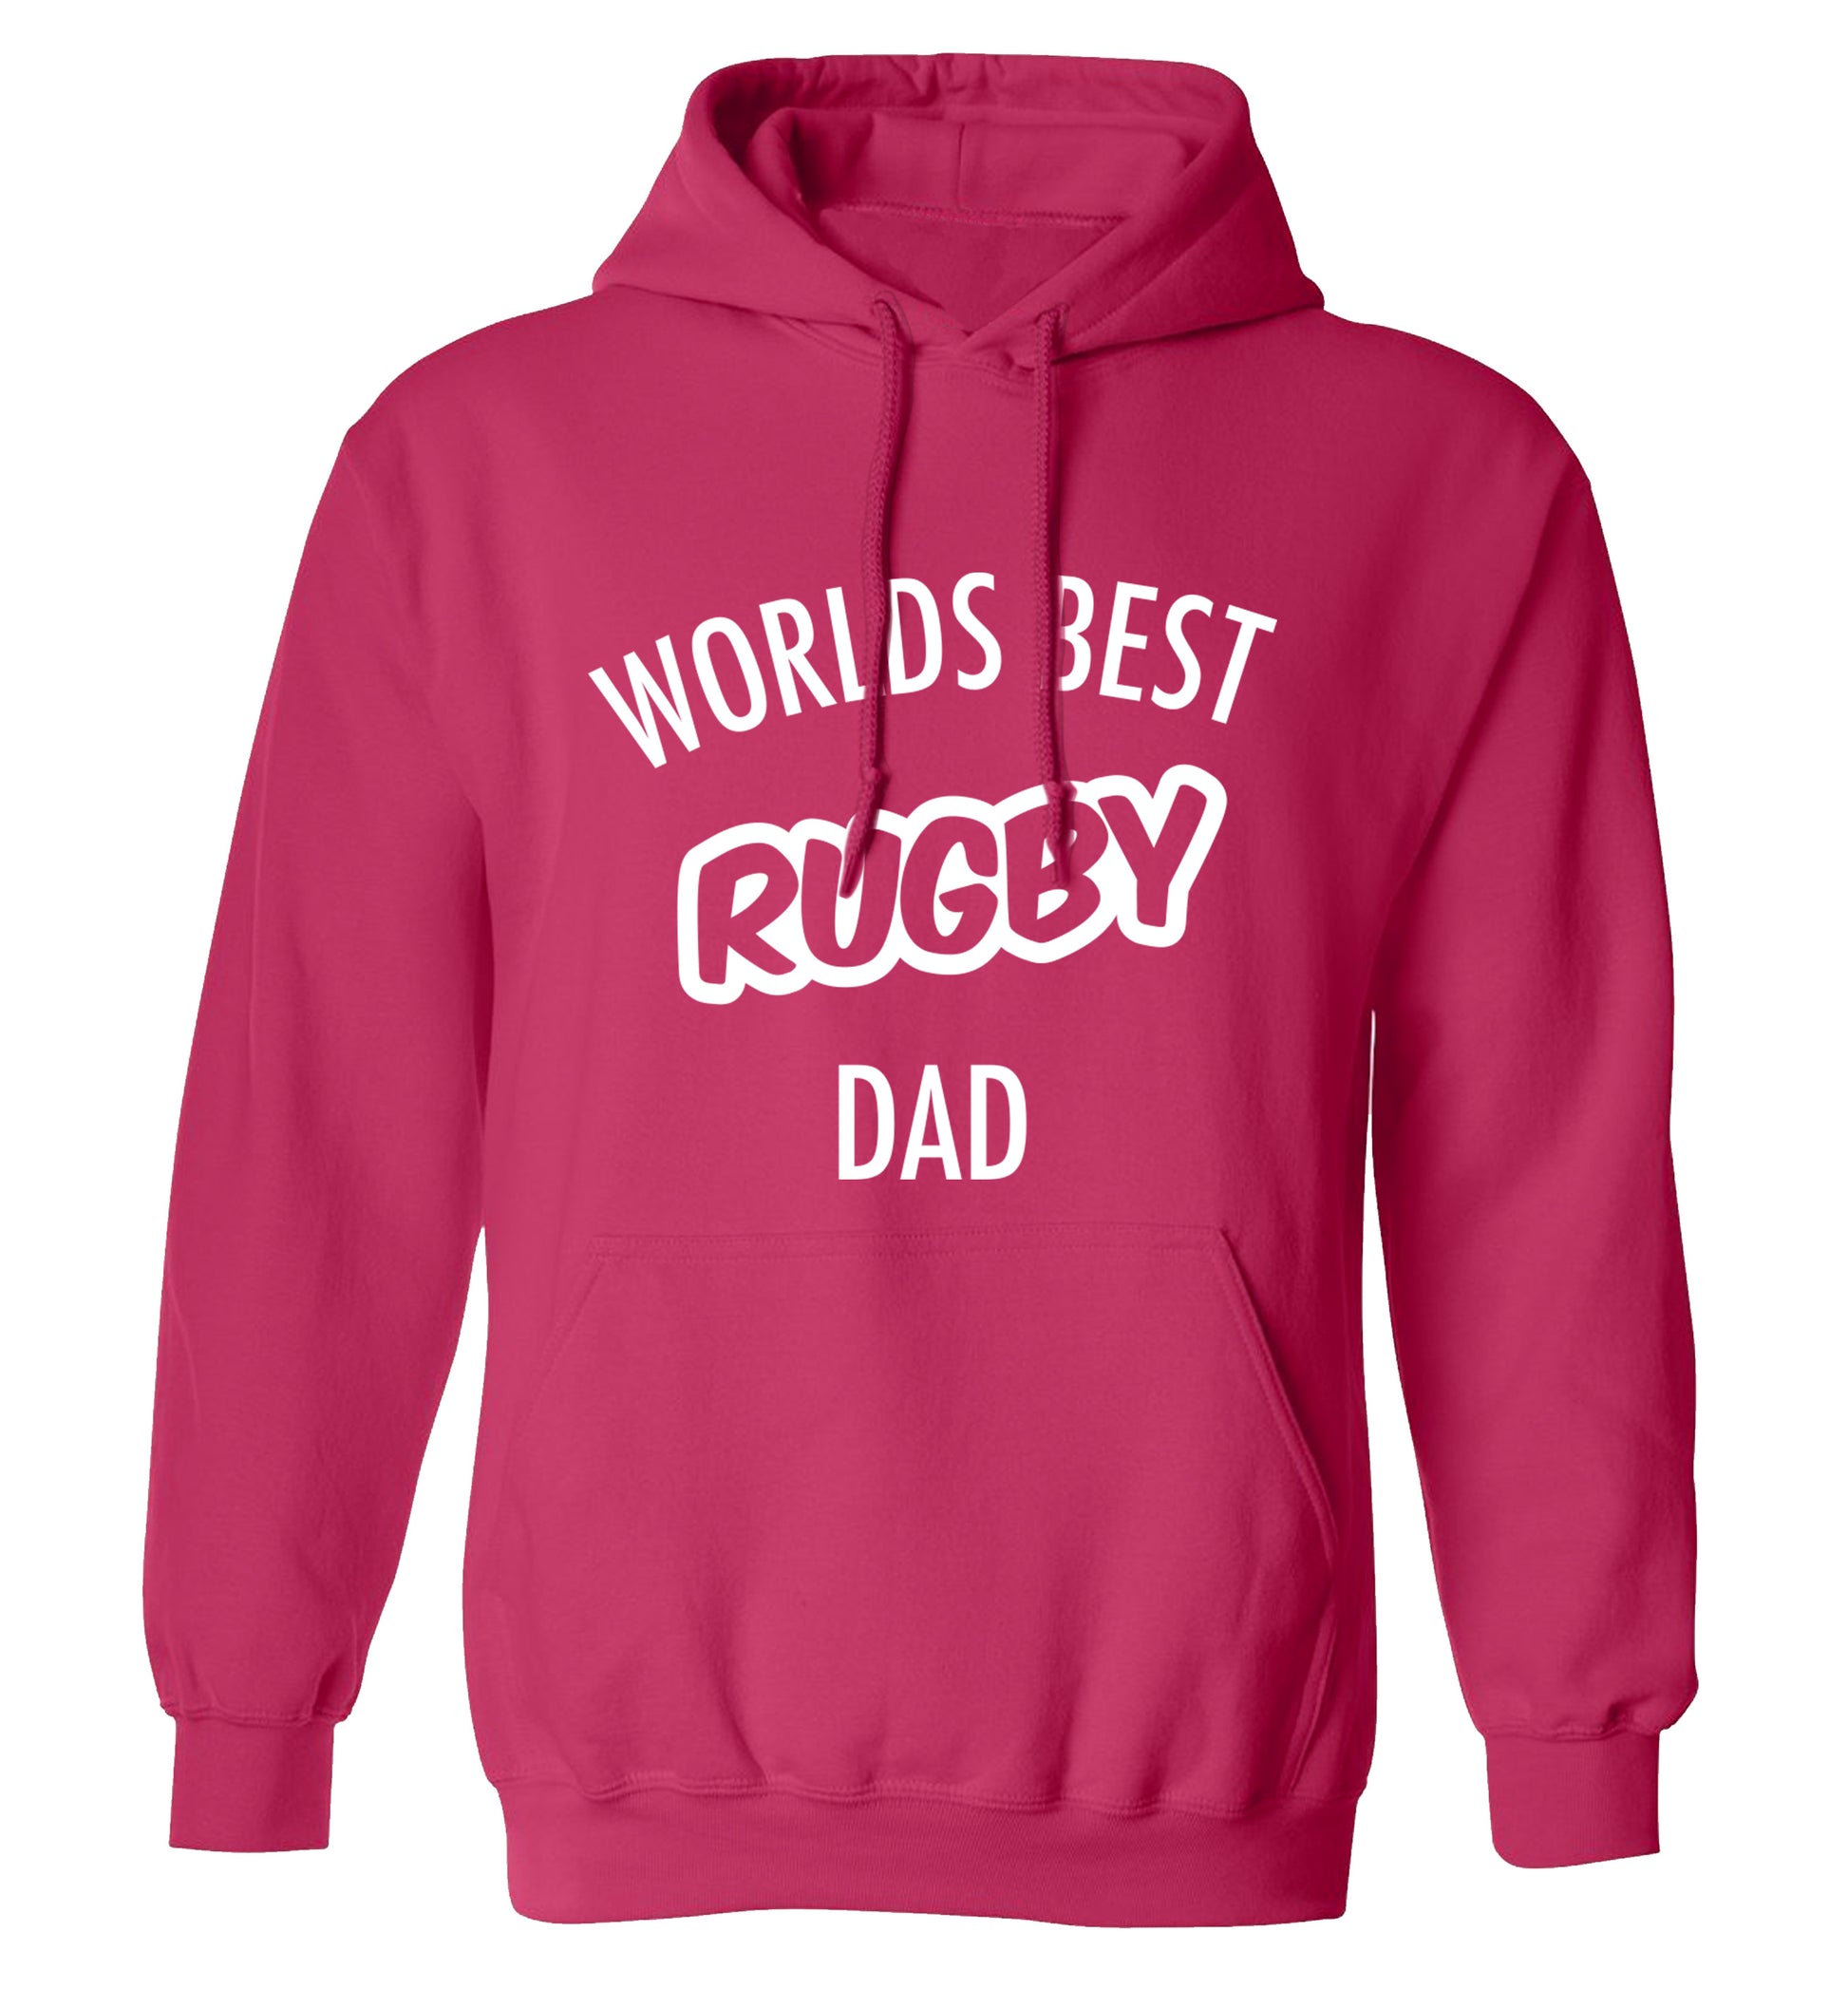 Worlds best rugby dad adults unisex pink hoodie 2XL